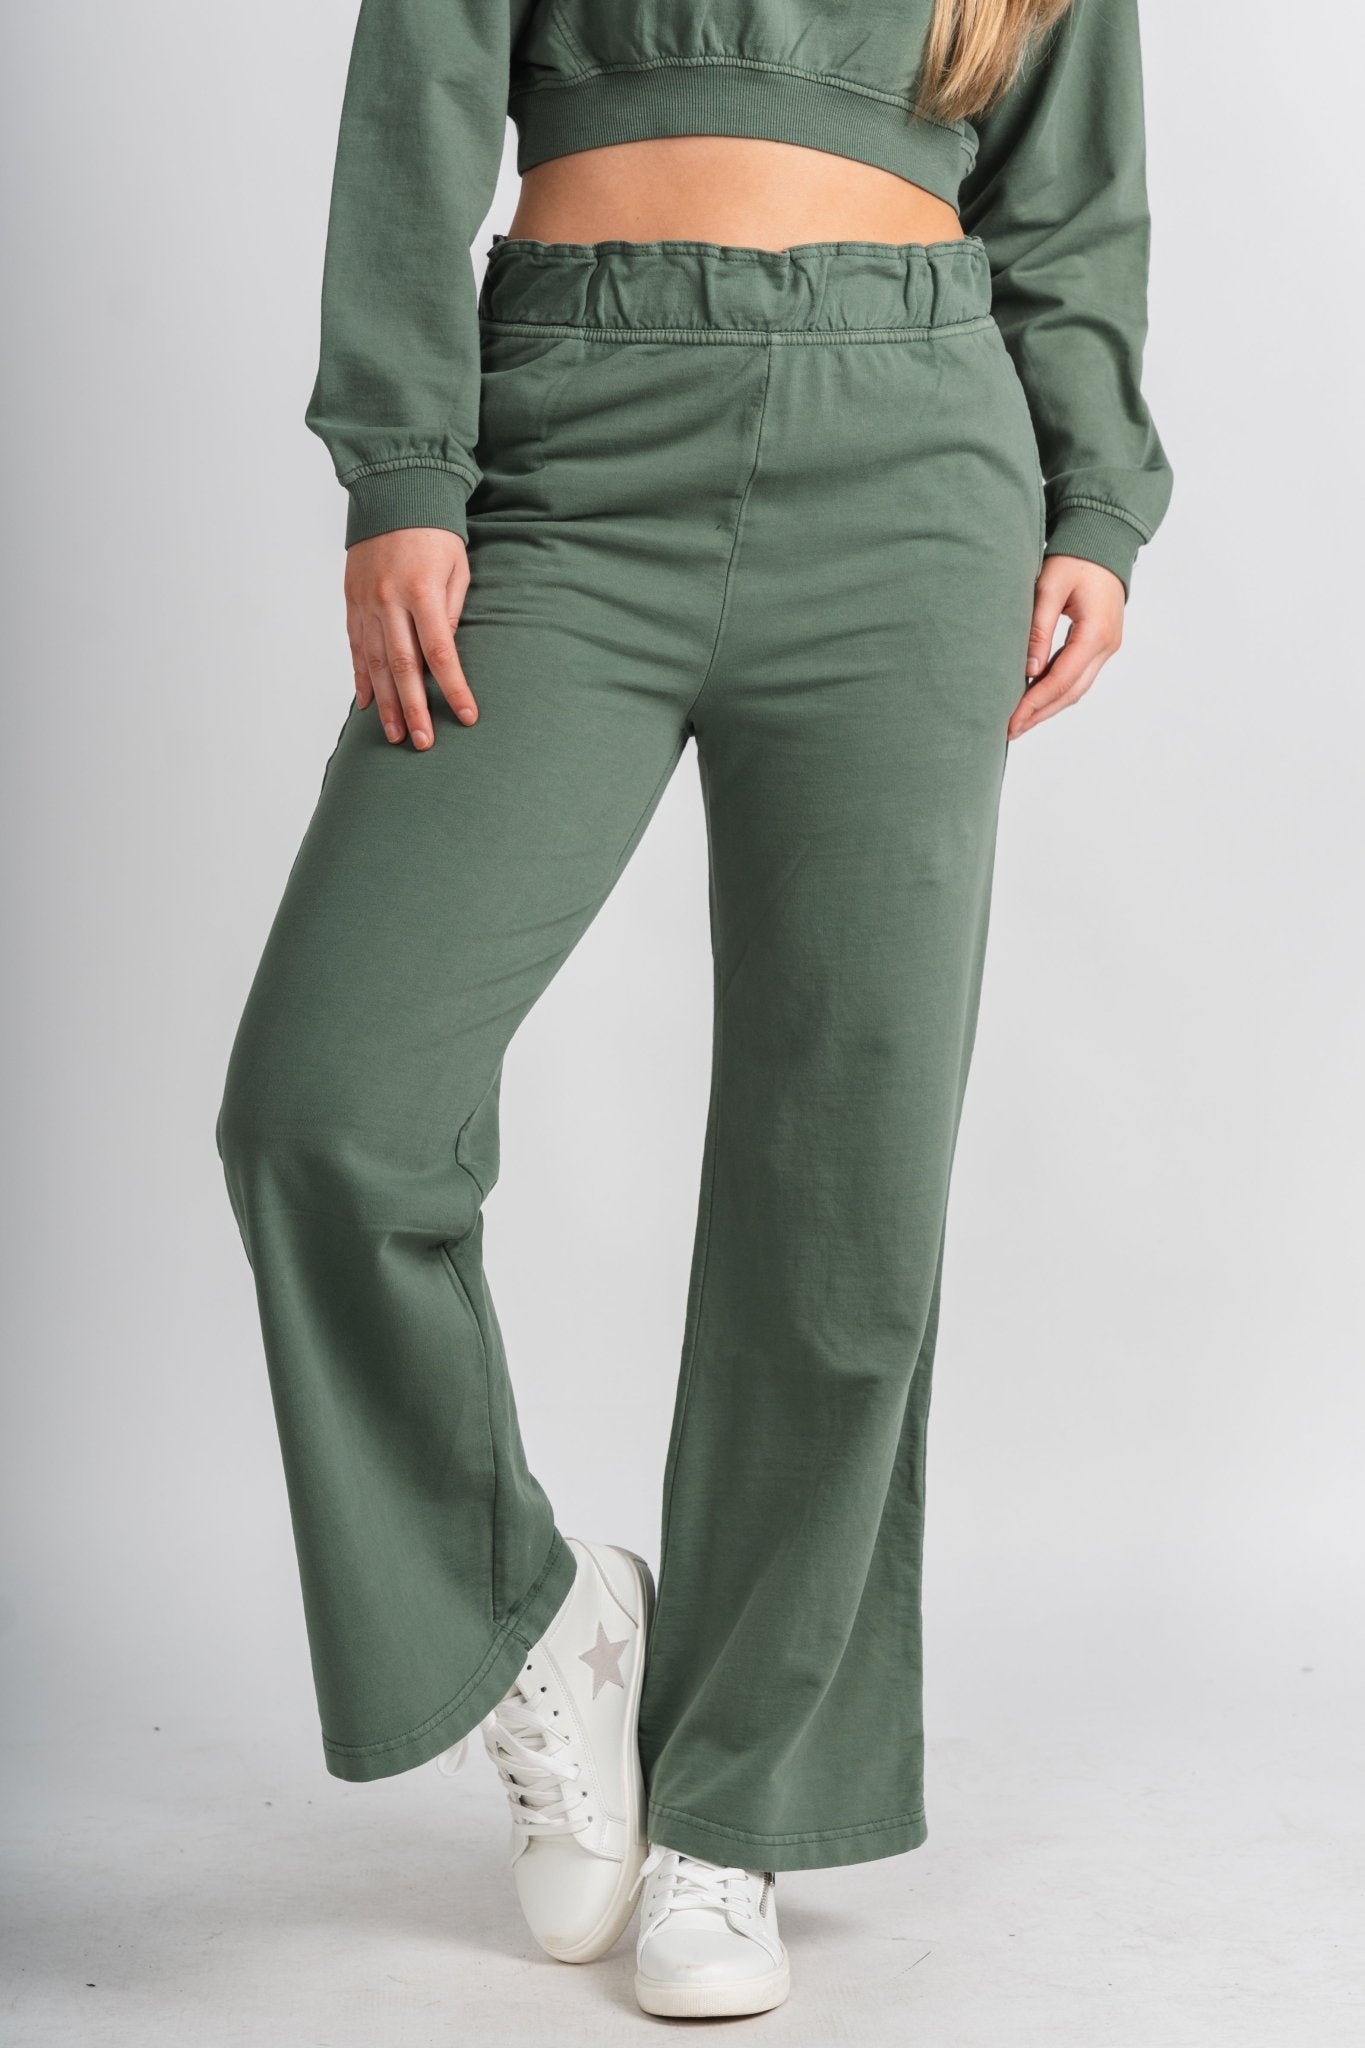 Mineral sweatpants gray green - Cute Pants - Fun Cozy Basics at Lush Fashion Lounge Boutique in Oklahoma City